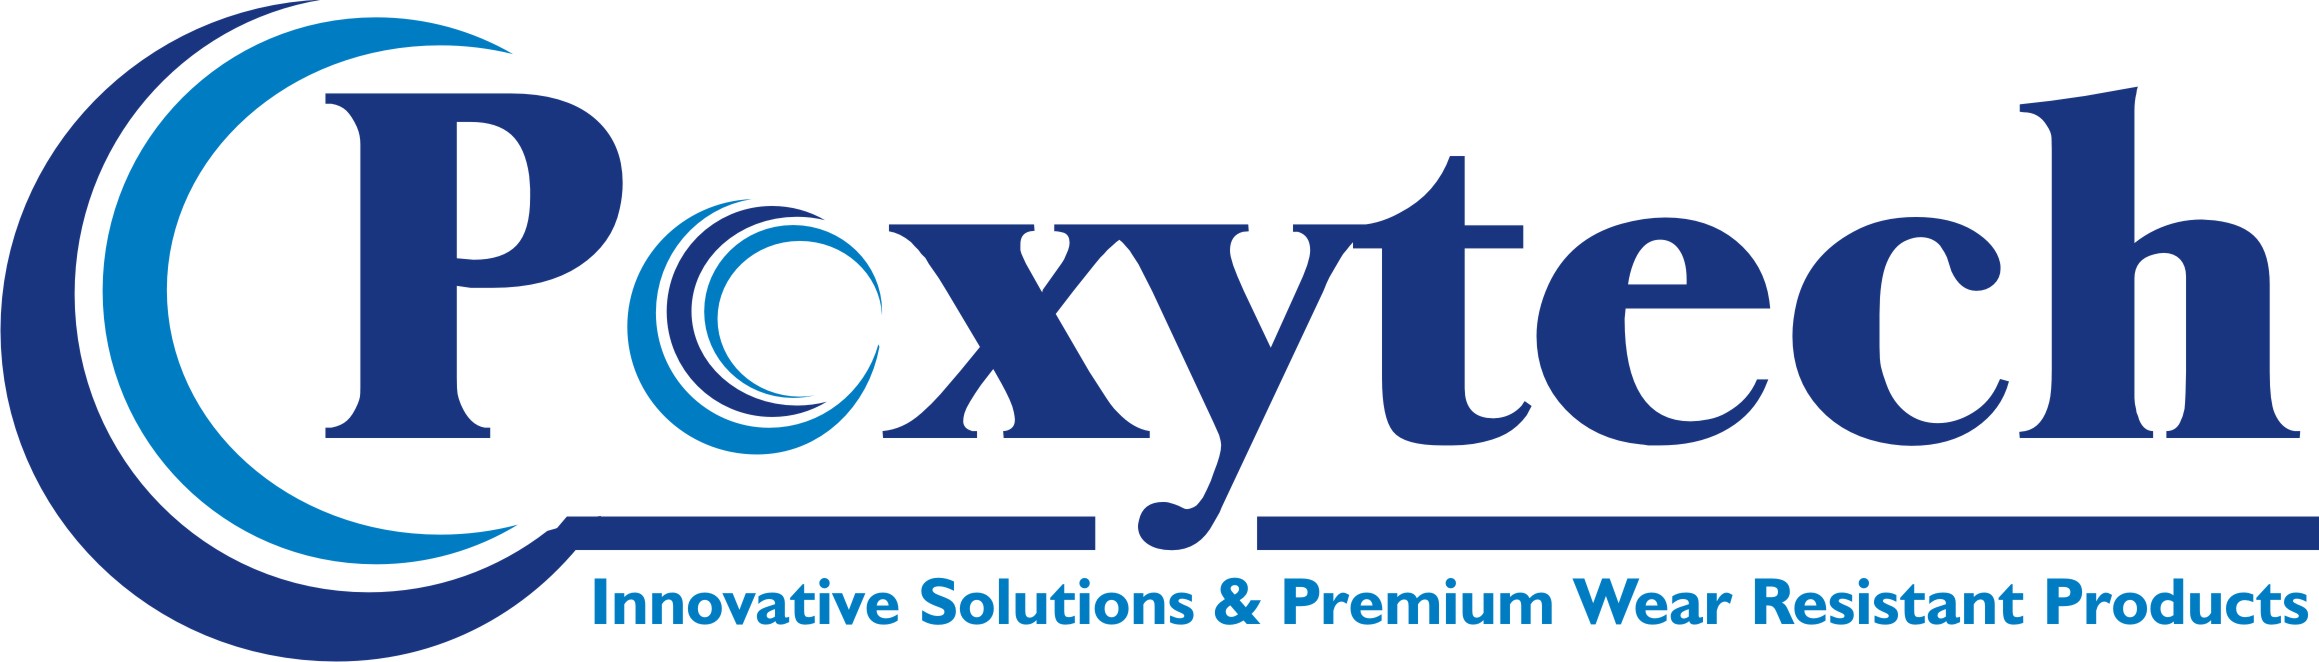 Poxytech cc logo